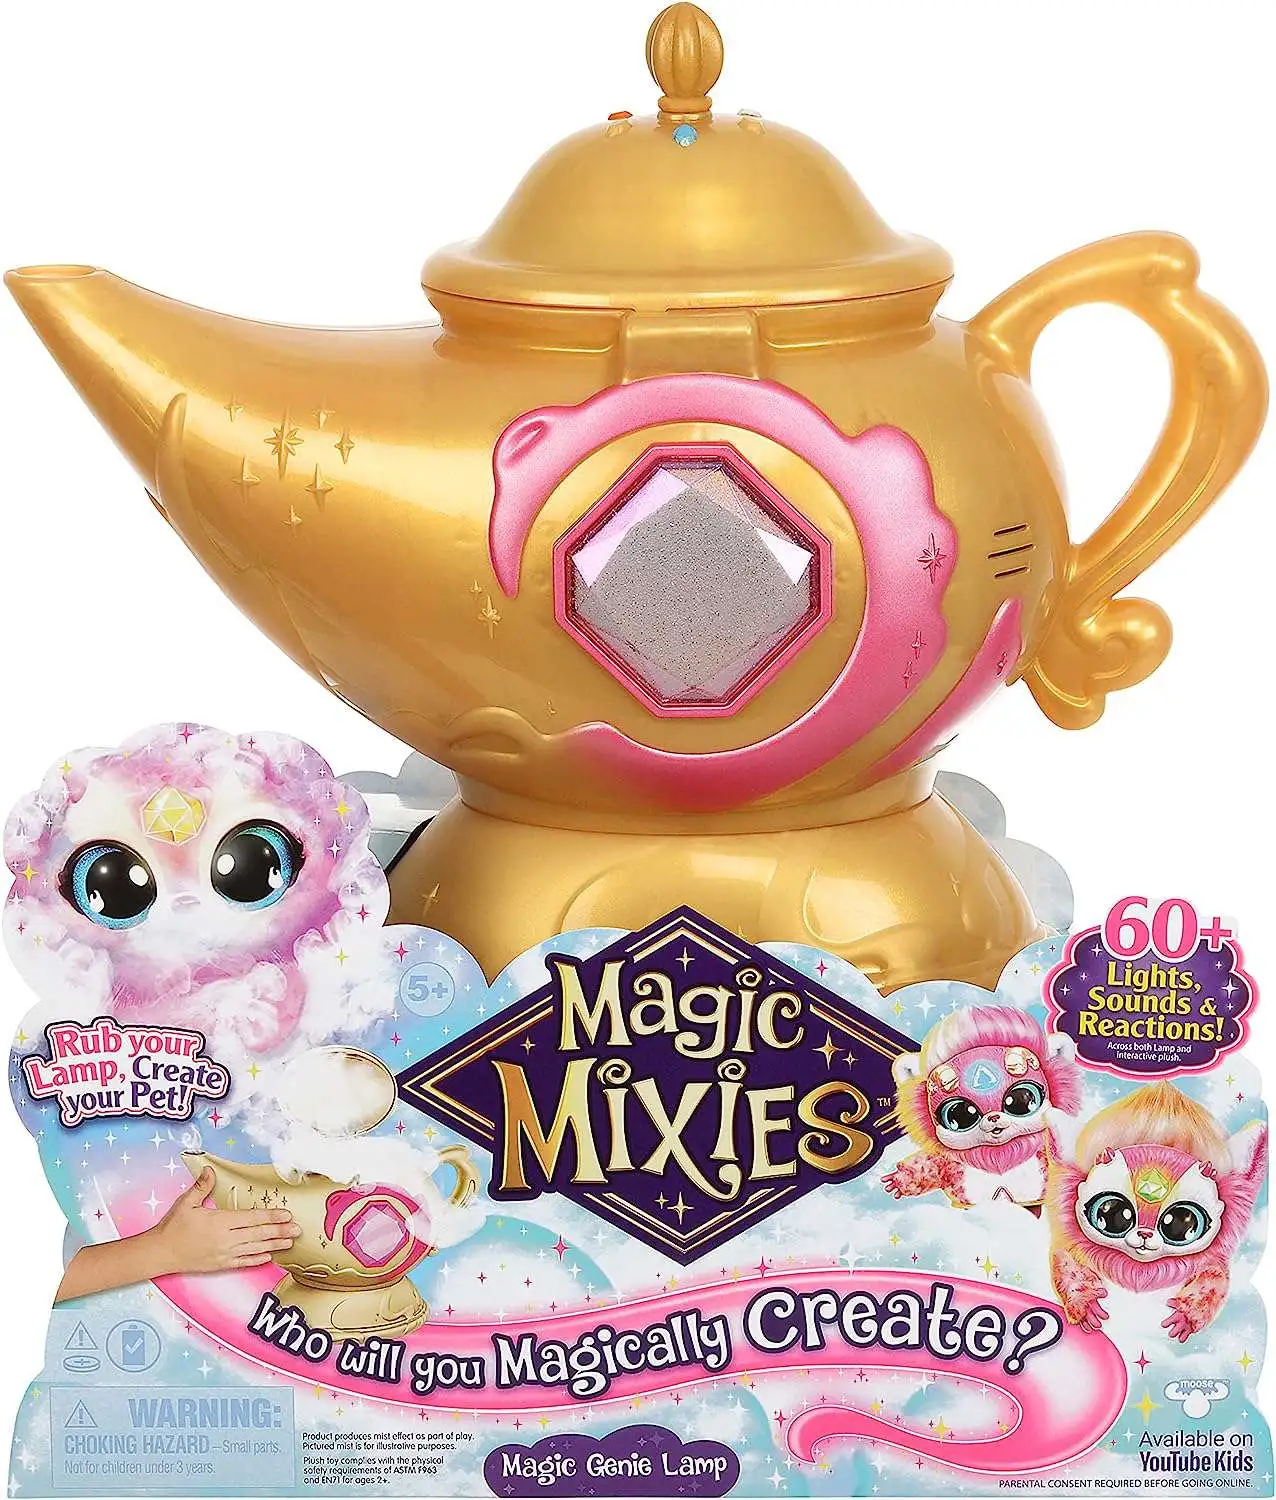 Magic Mixies Cauldron Who Will You Magically Create?! Blue & Pink